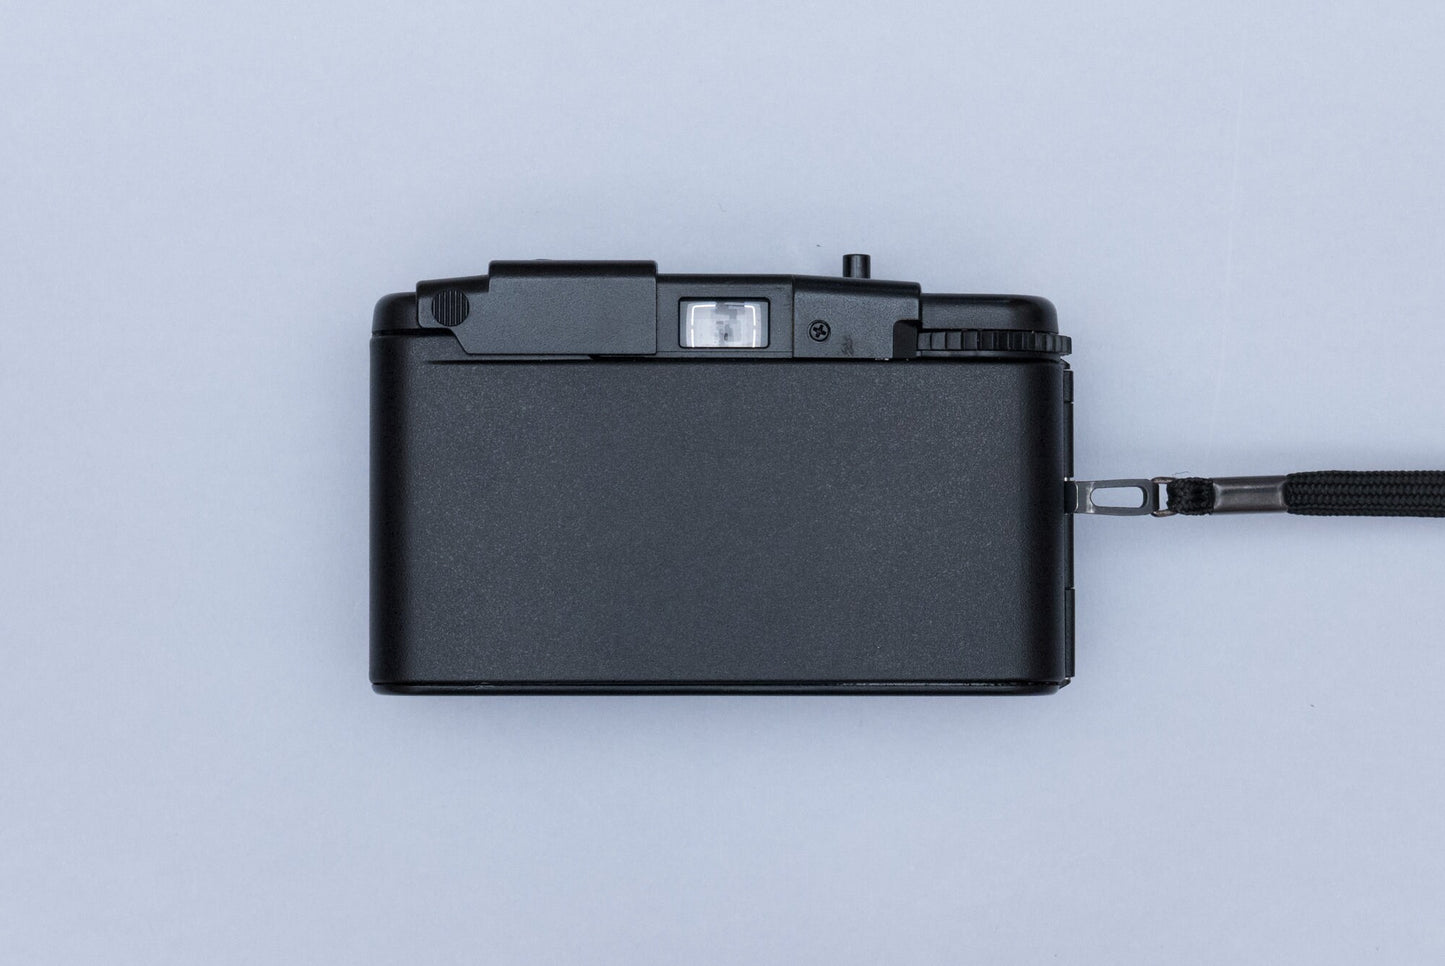 Olympus XA 1 Compact Film Camera with Zuiko 4/35mm lens